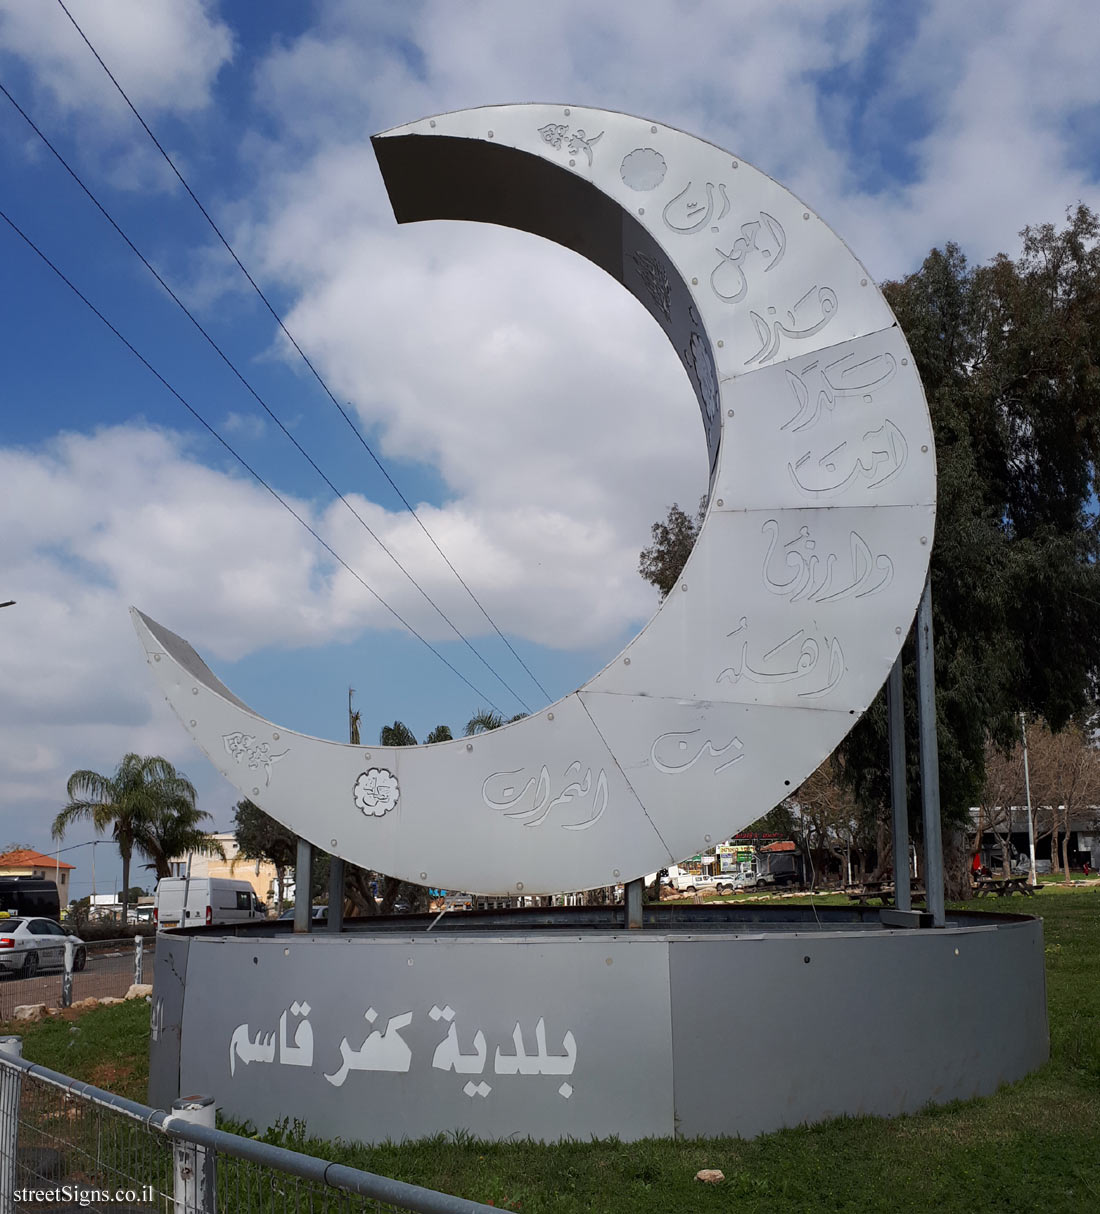 Kfar Qasim - Entrance sign to the city